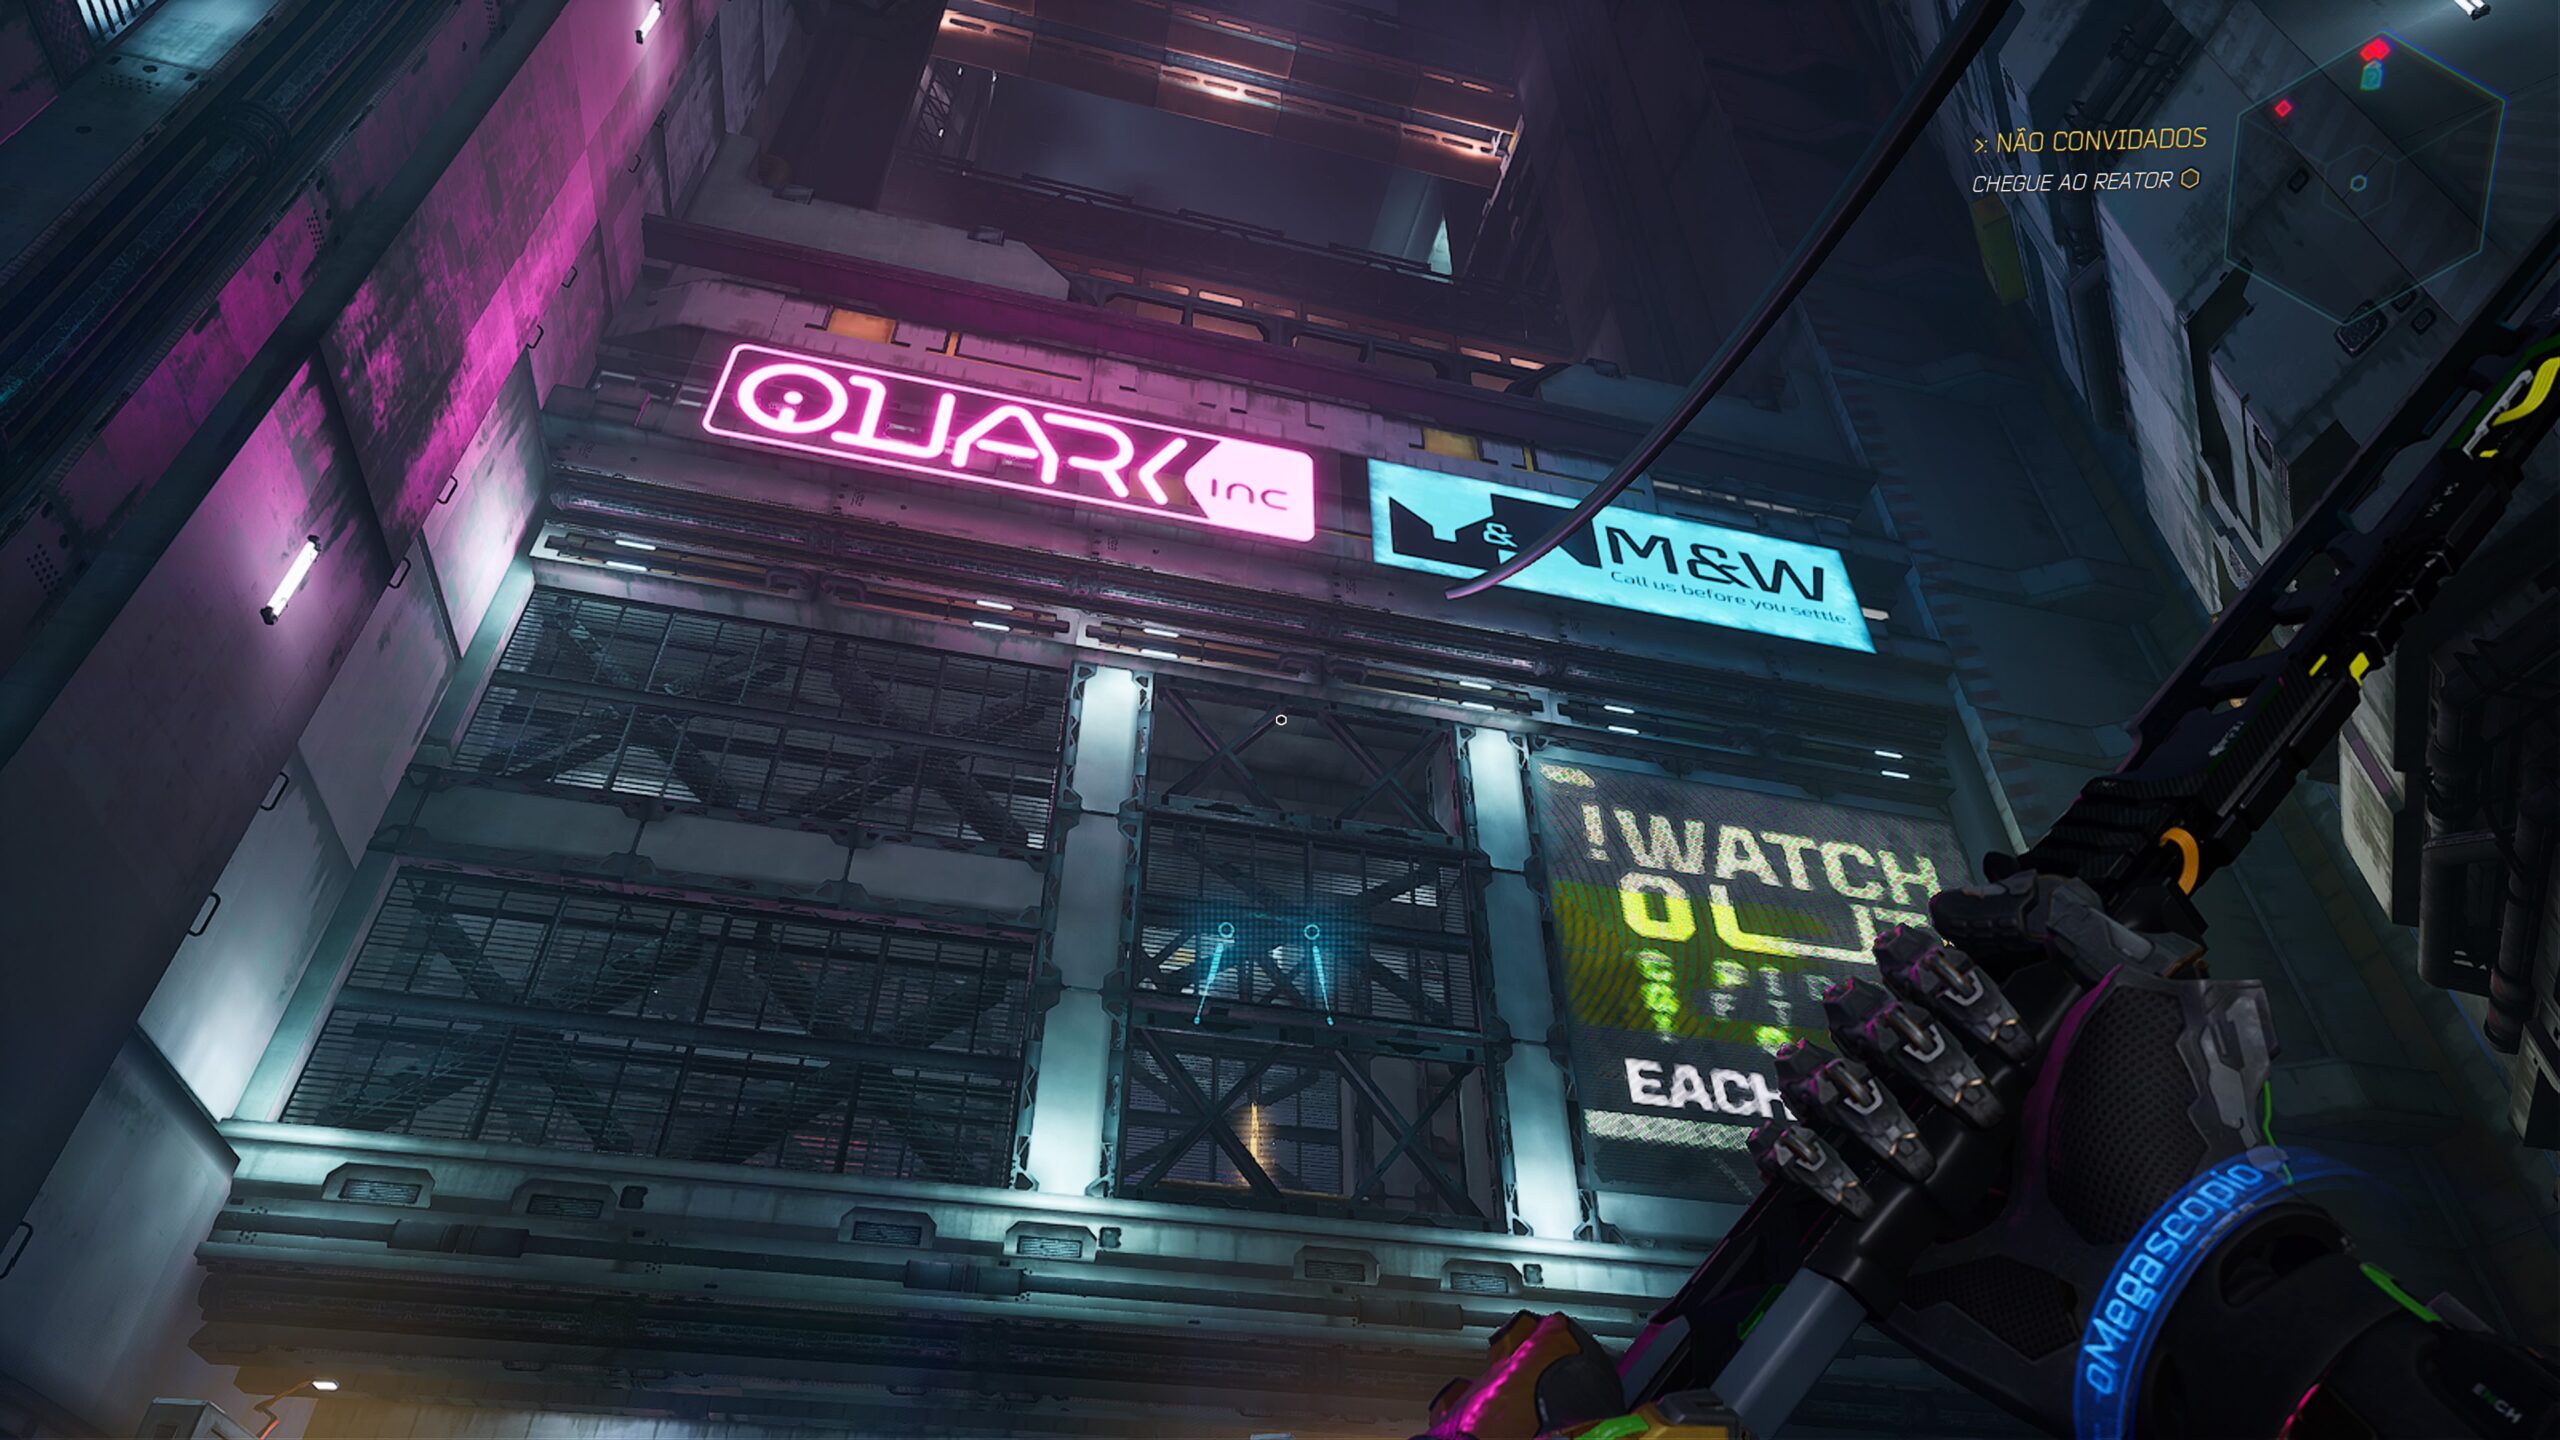 Crítica: Ghostrunner 2 amplia sua gameplay frenética e viceral